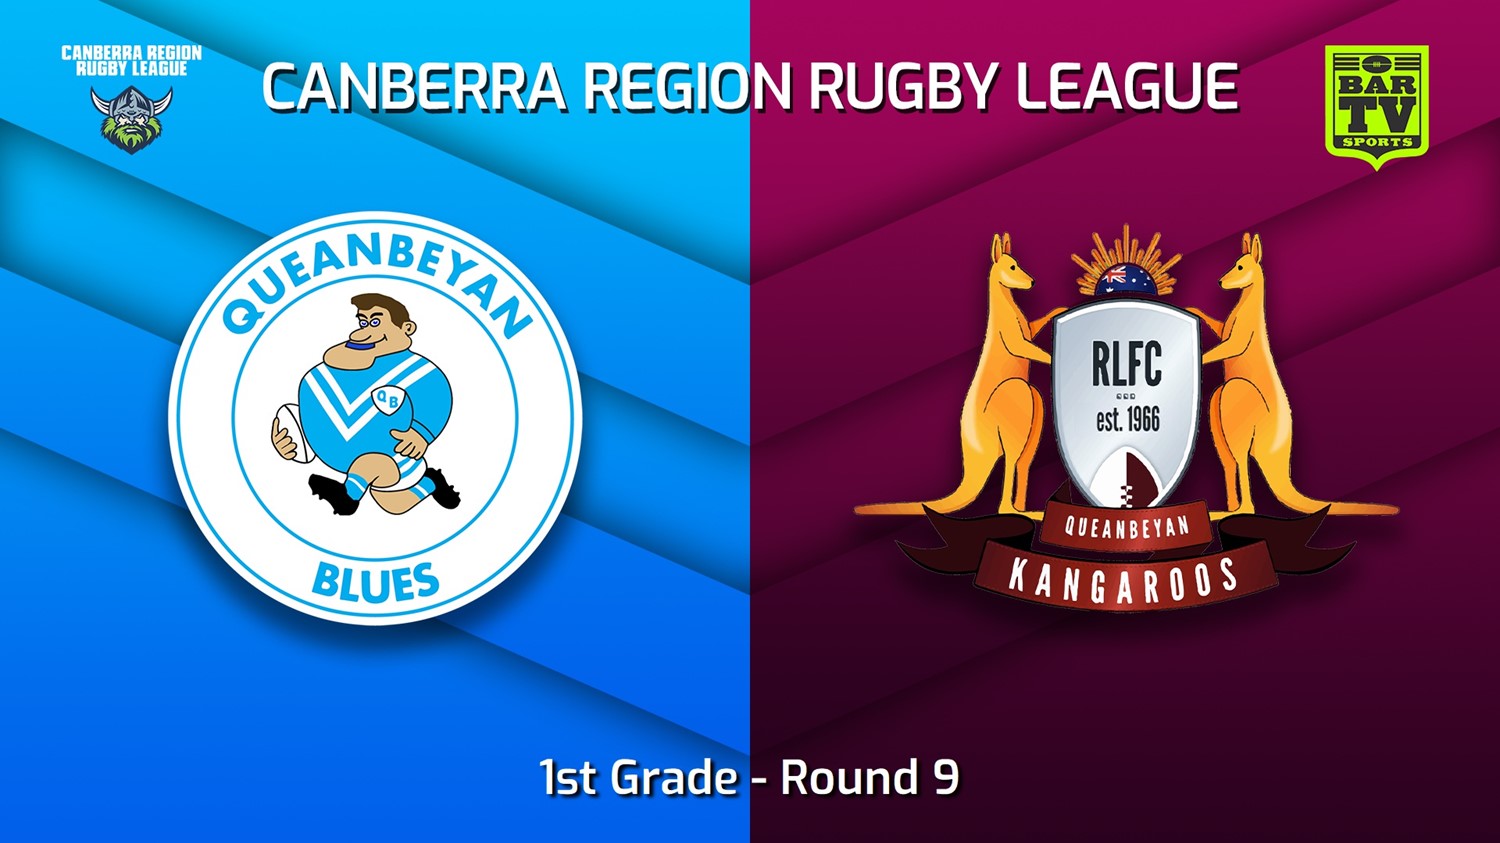 230617-Canberra Round 9 - 1st Grade - Queanbeyan Blues v Queanbeyan Kangaroos Slate Image